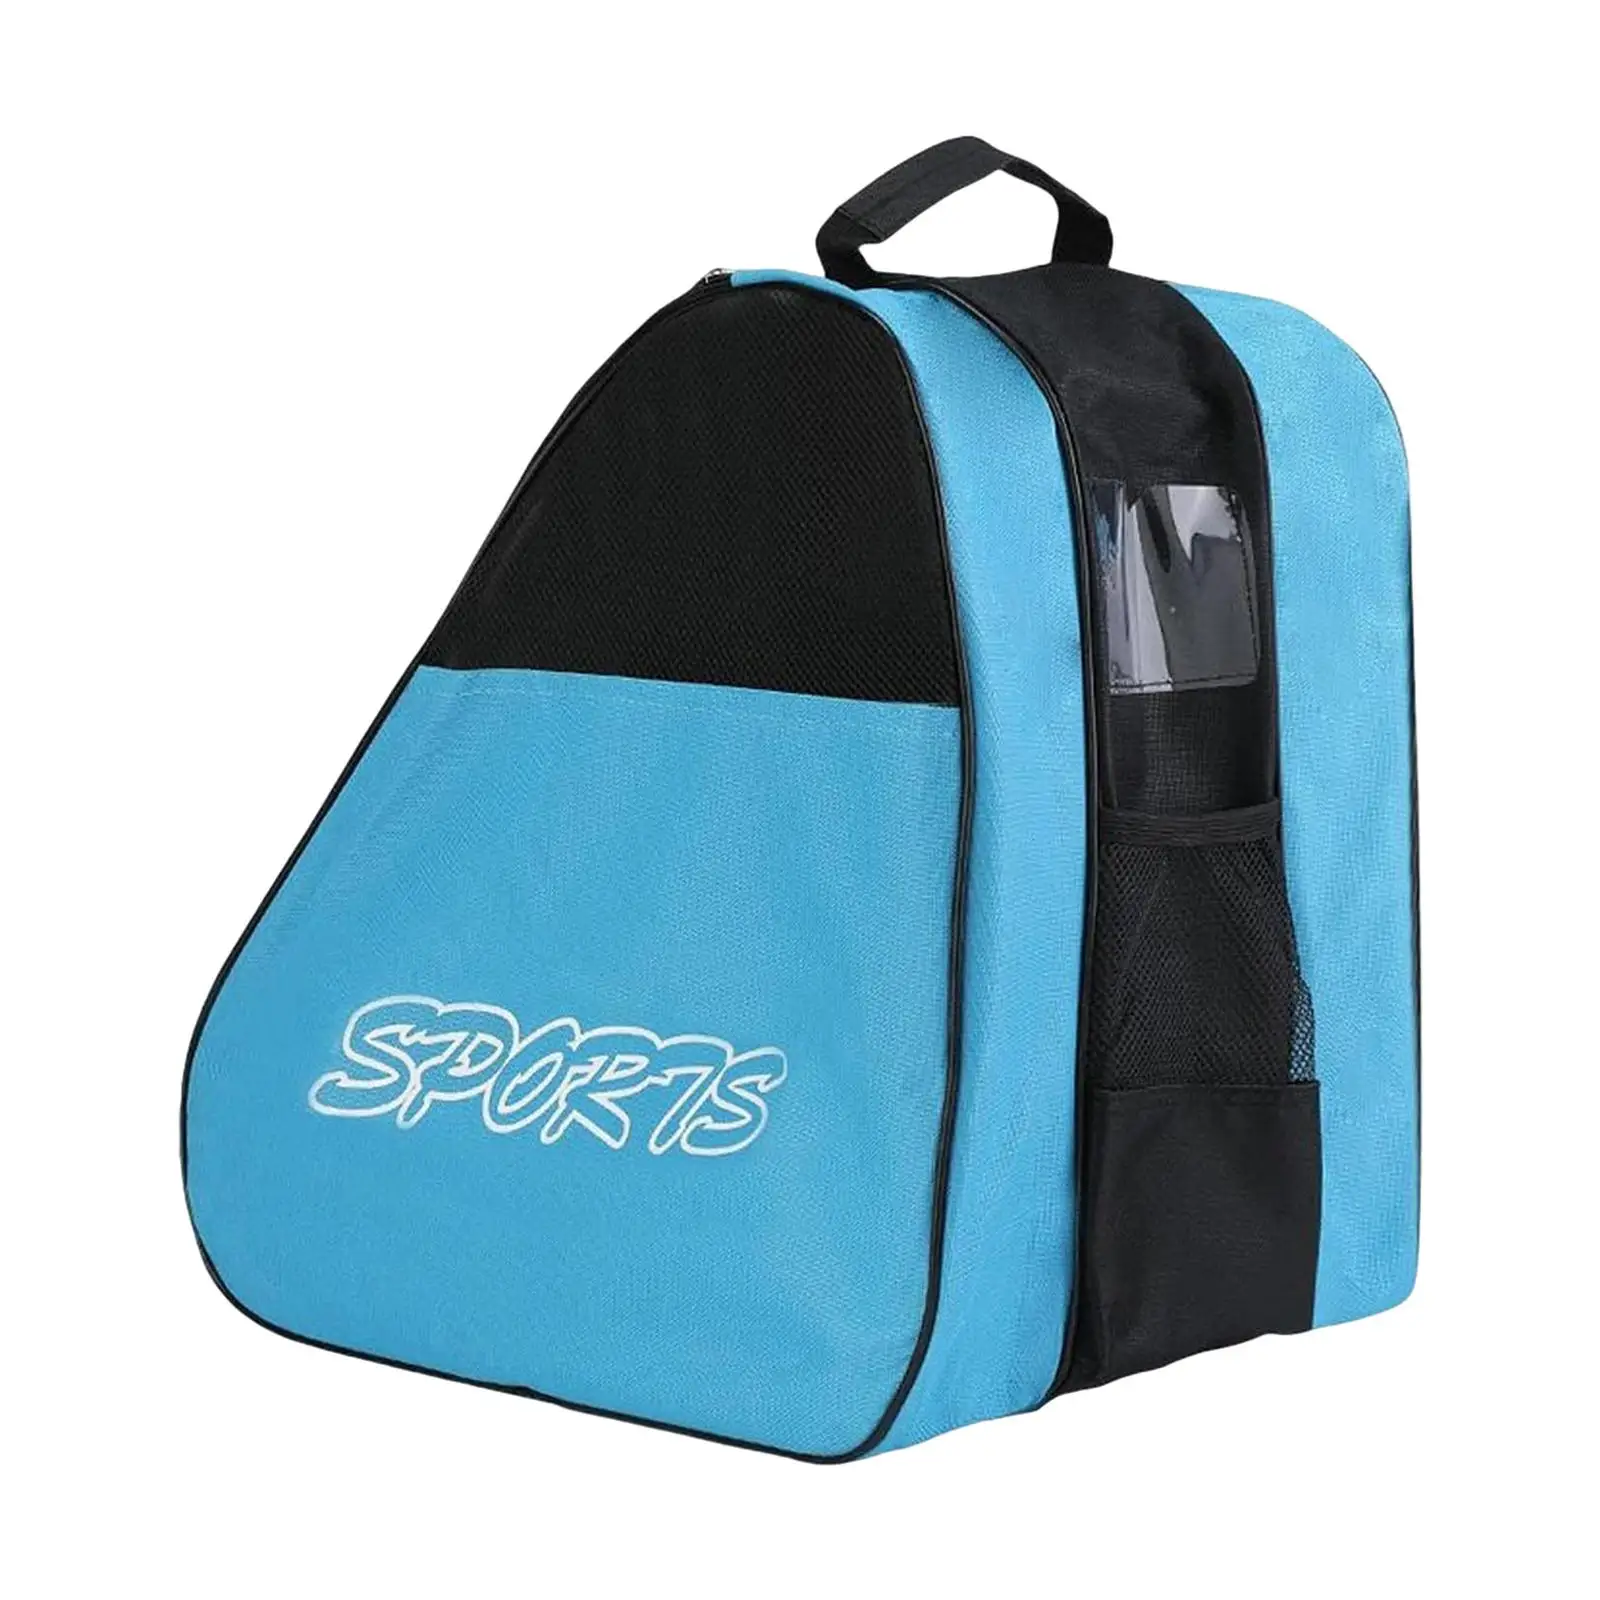 Roller Skates Bag Roller Skate Carrier Skates Storage Bag Handbag for Ice Hockey Skate Figure Skates Inline Skates Quad Skates